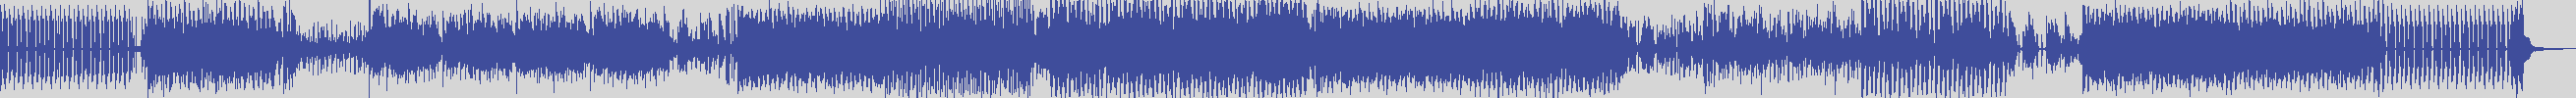 atomic_recordings [AR014] Essepi - Booma Yee [Original Version] audio wave form